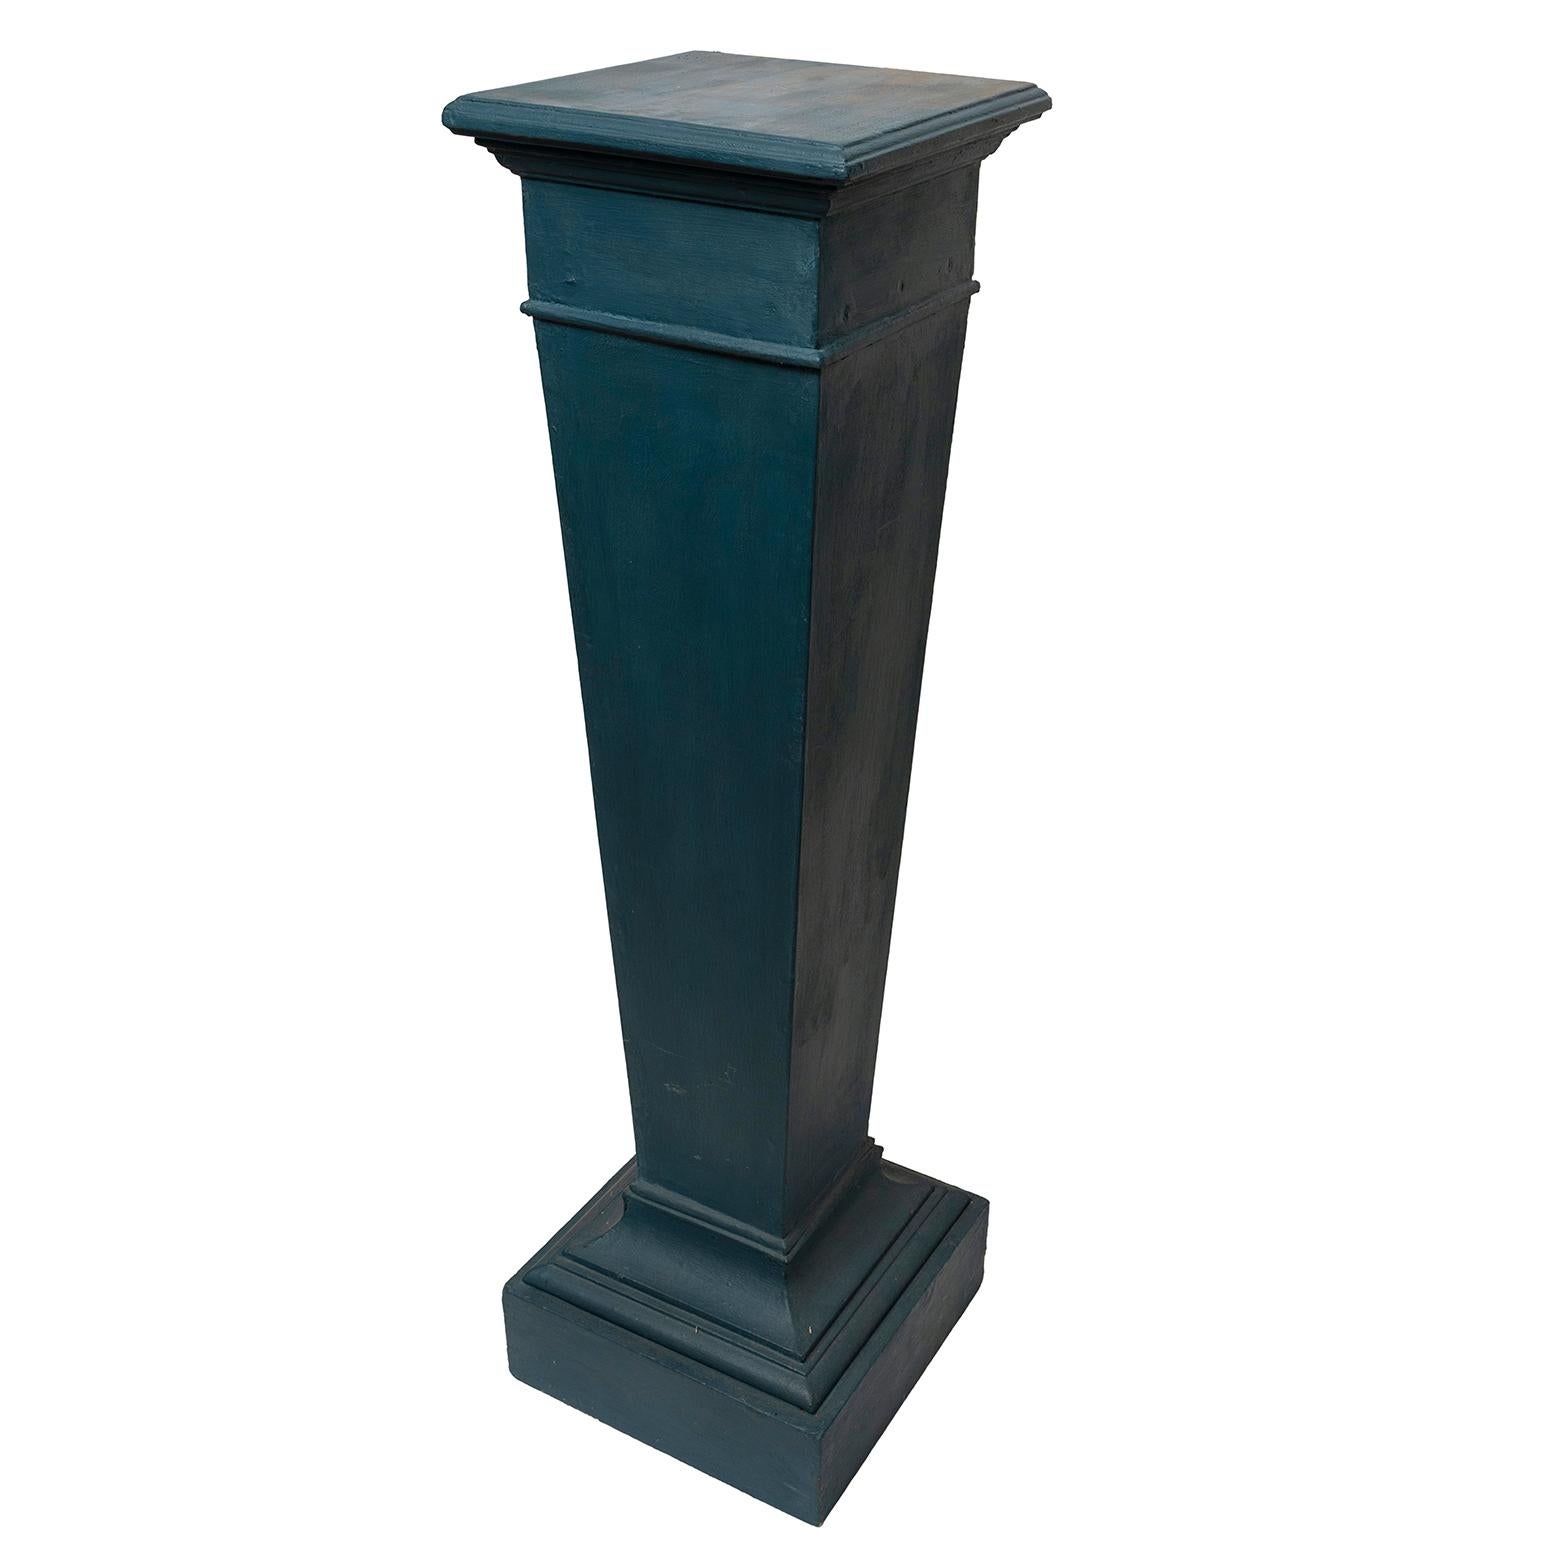 Elegant Dutch Blue Pedestal of Classical Form

Suitable for displaying sculpture, ceramics or plants

Height 115cm., 45